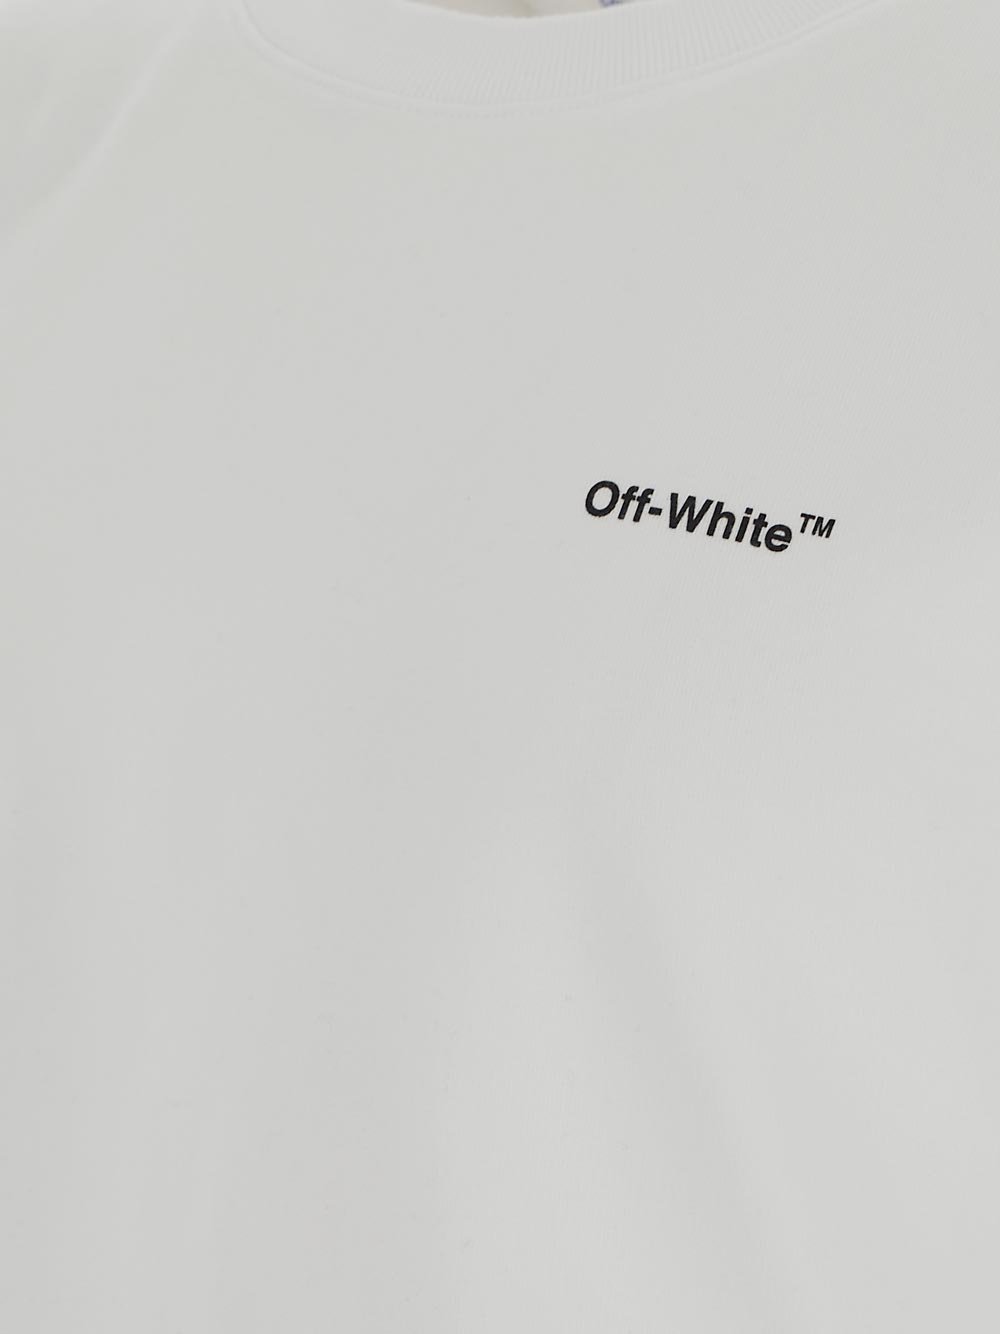 Off-White Diagonal Helvetica Long-Sleeved Sweatshirt